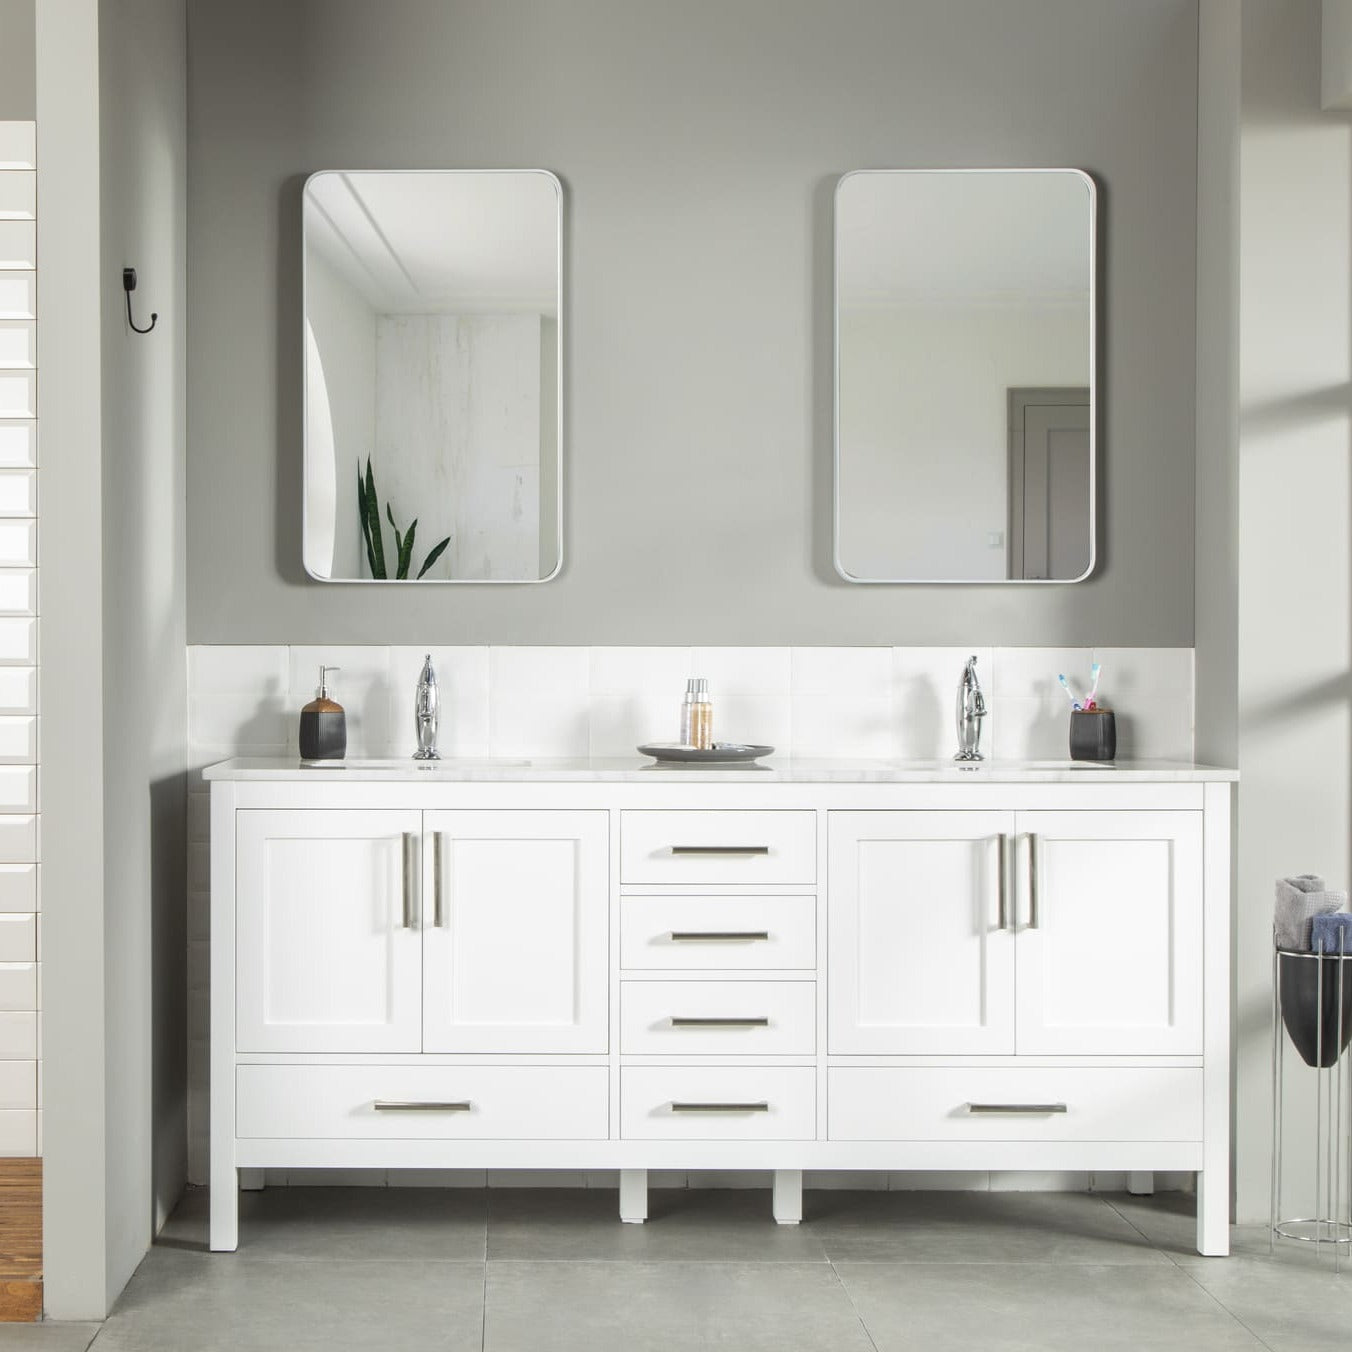 Ahley Bathroom Vanity Homelero 72"  #size_72"  #color_white  #hardware_brushed nickel